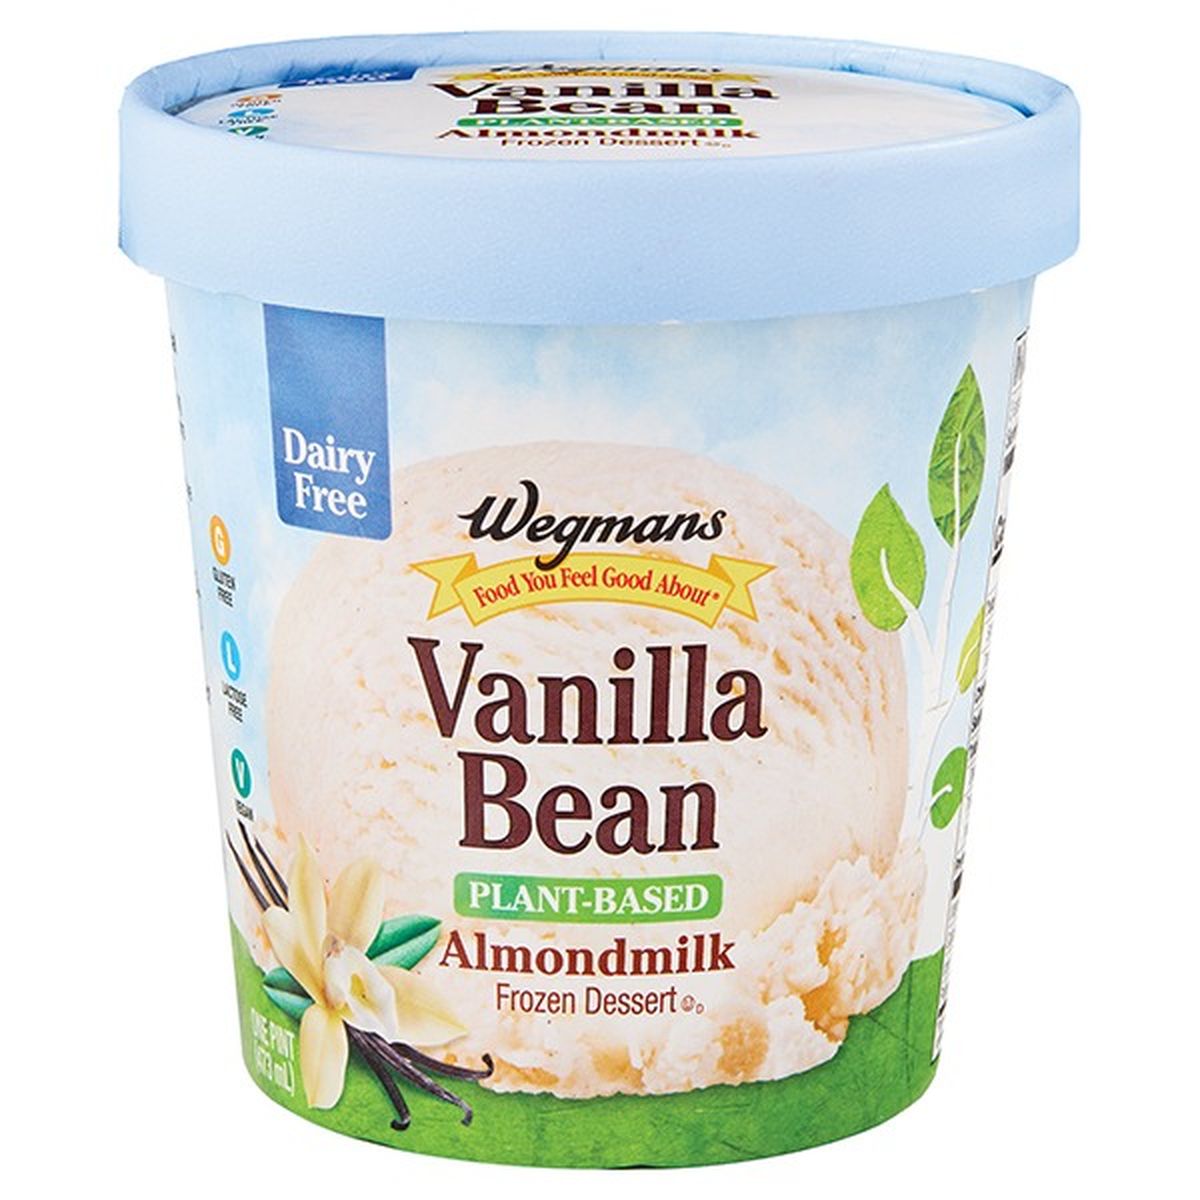 Calories in Wegmans Ice Cream, Plant-Based, Almondmillk, Vanilla Bean